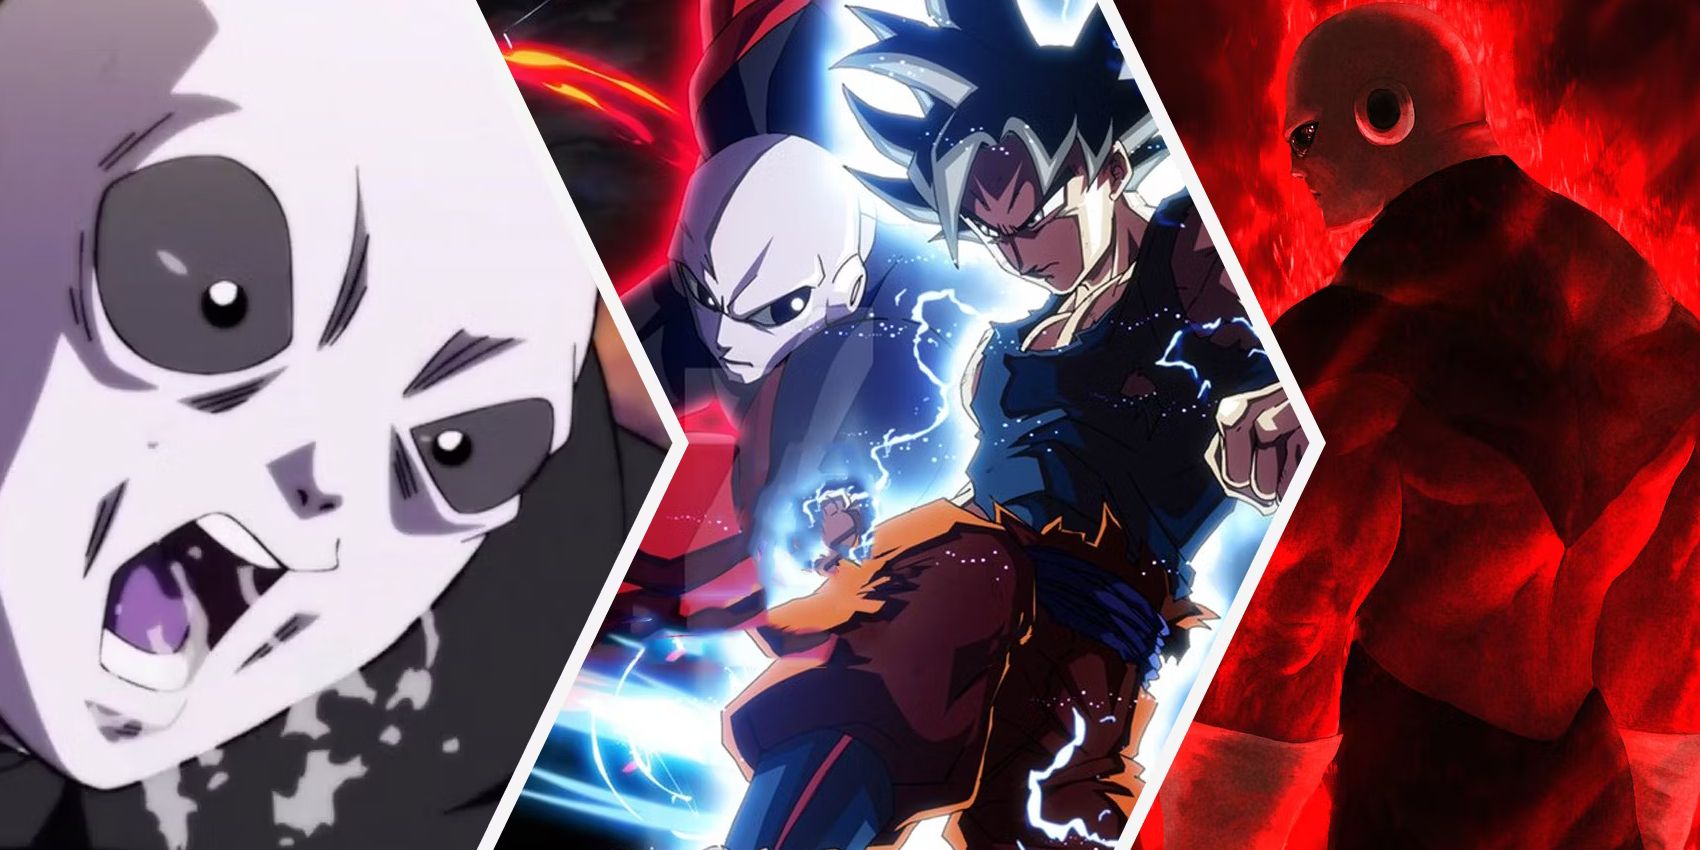 Jiren vs kamba legendado in 2023  Anime dragon ball super, Anime